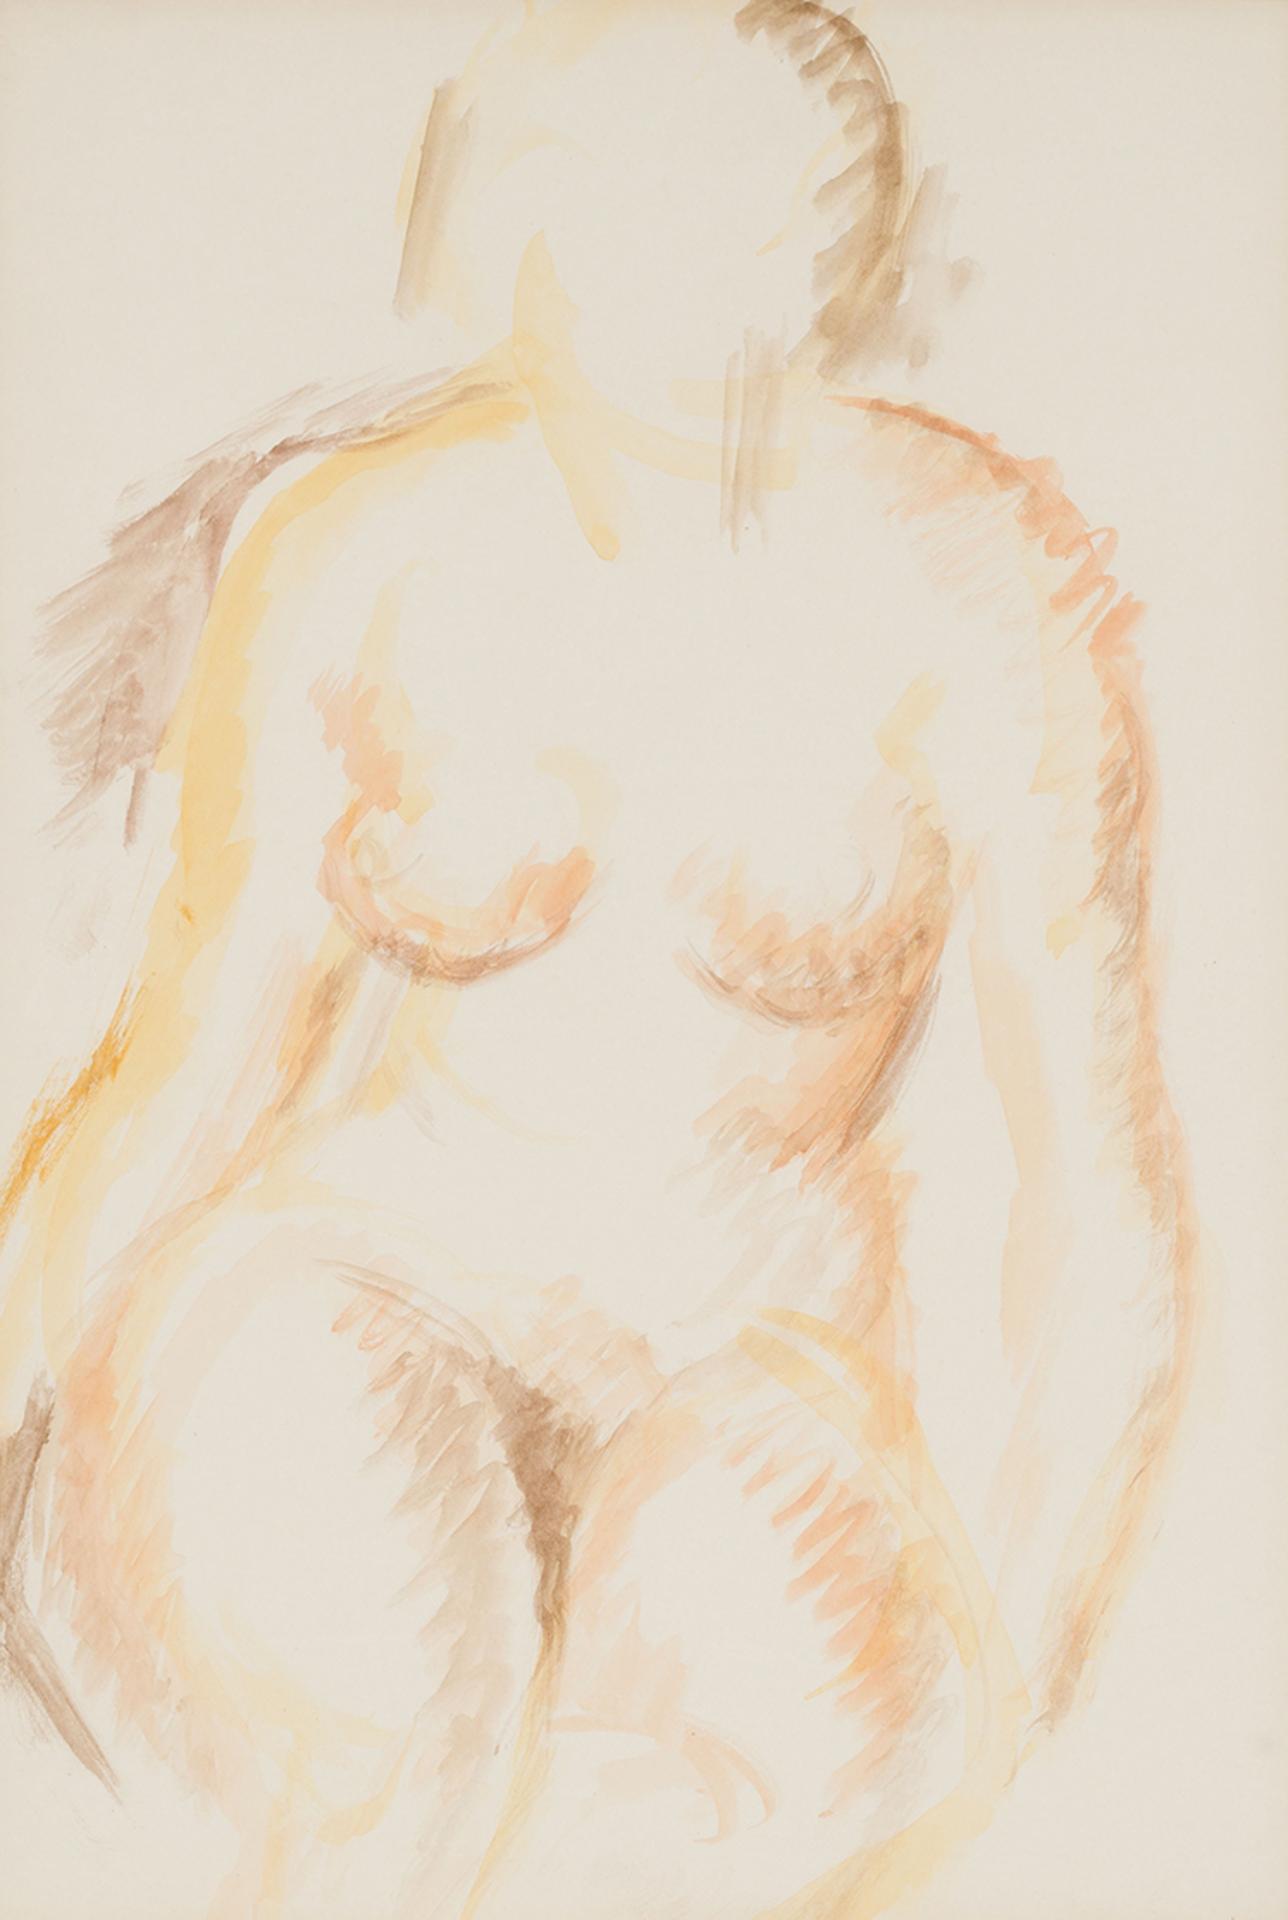 Lionel Lemoine FitzGerald (1890-1956) - Nude in Yellow & Brown